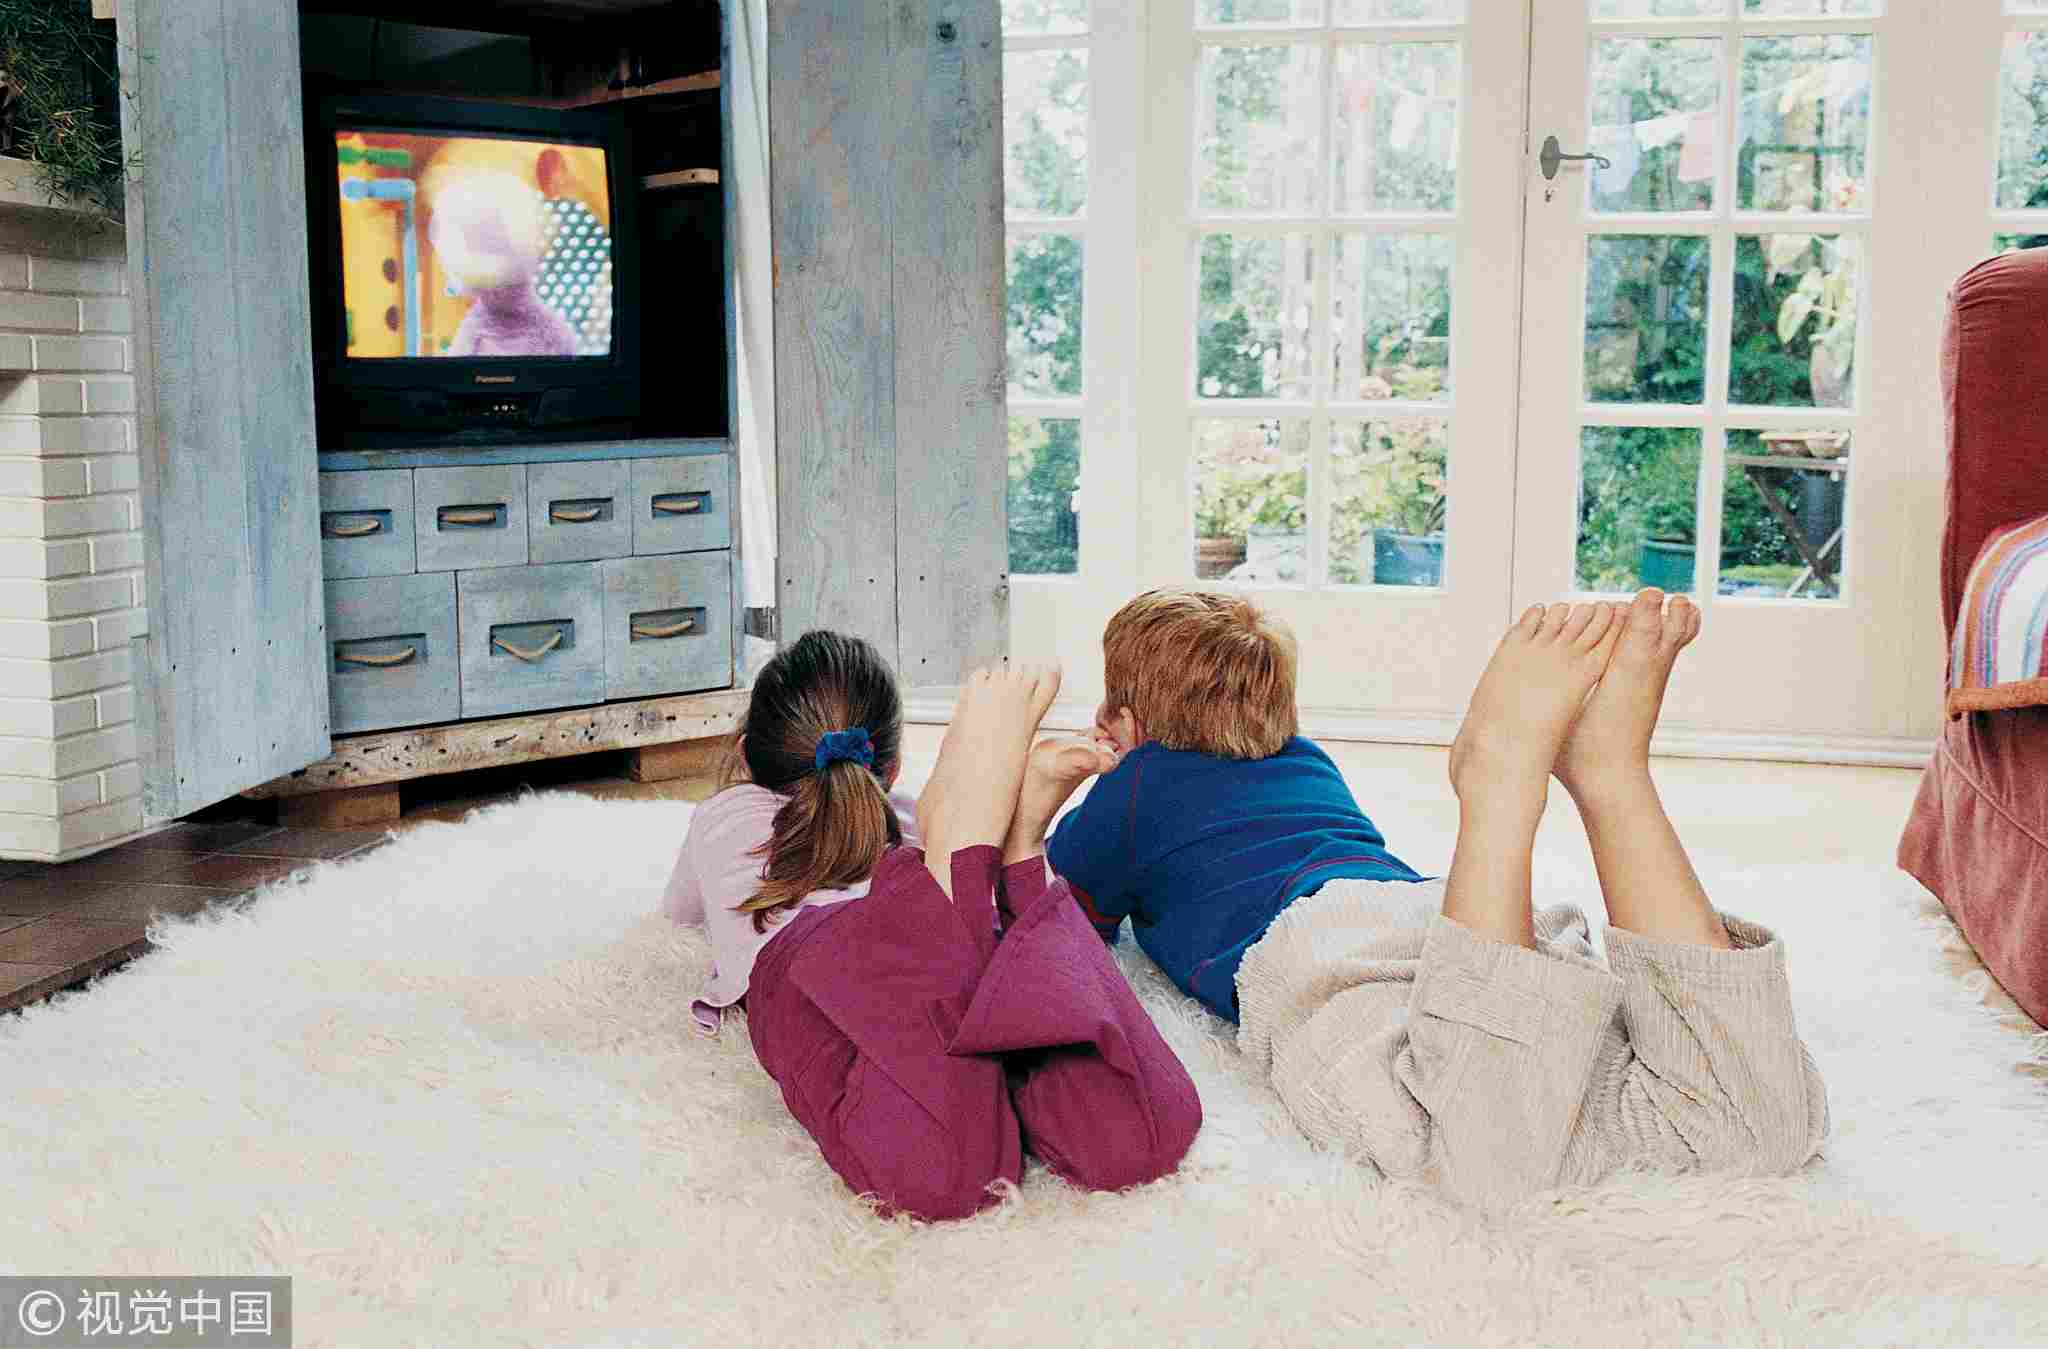 Пока родители смотрят телевизор